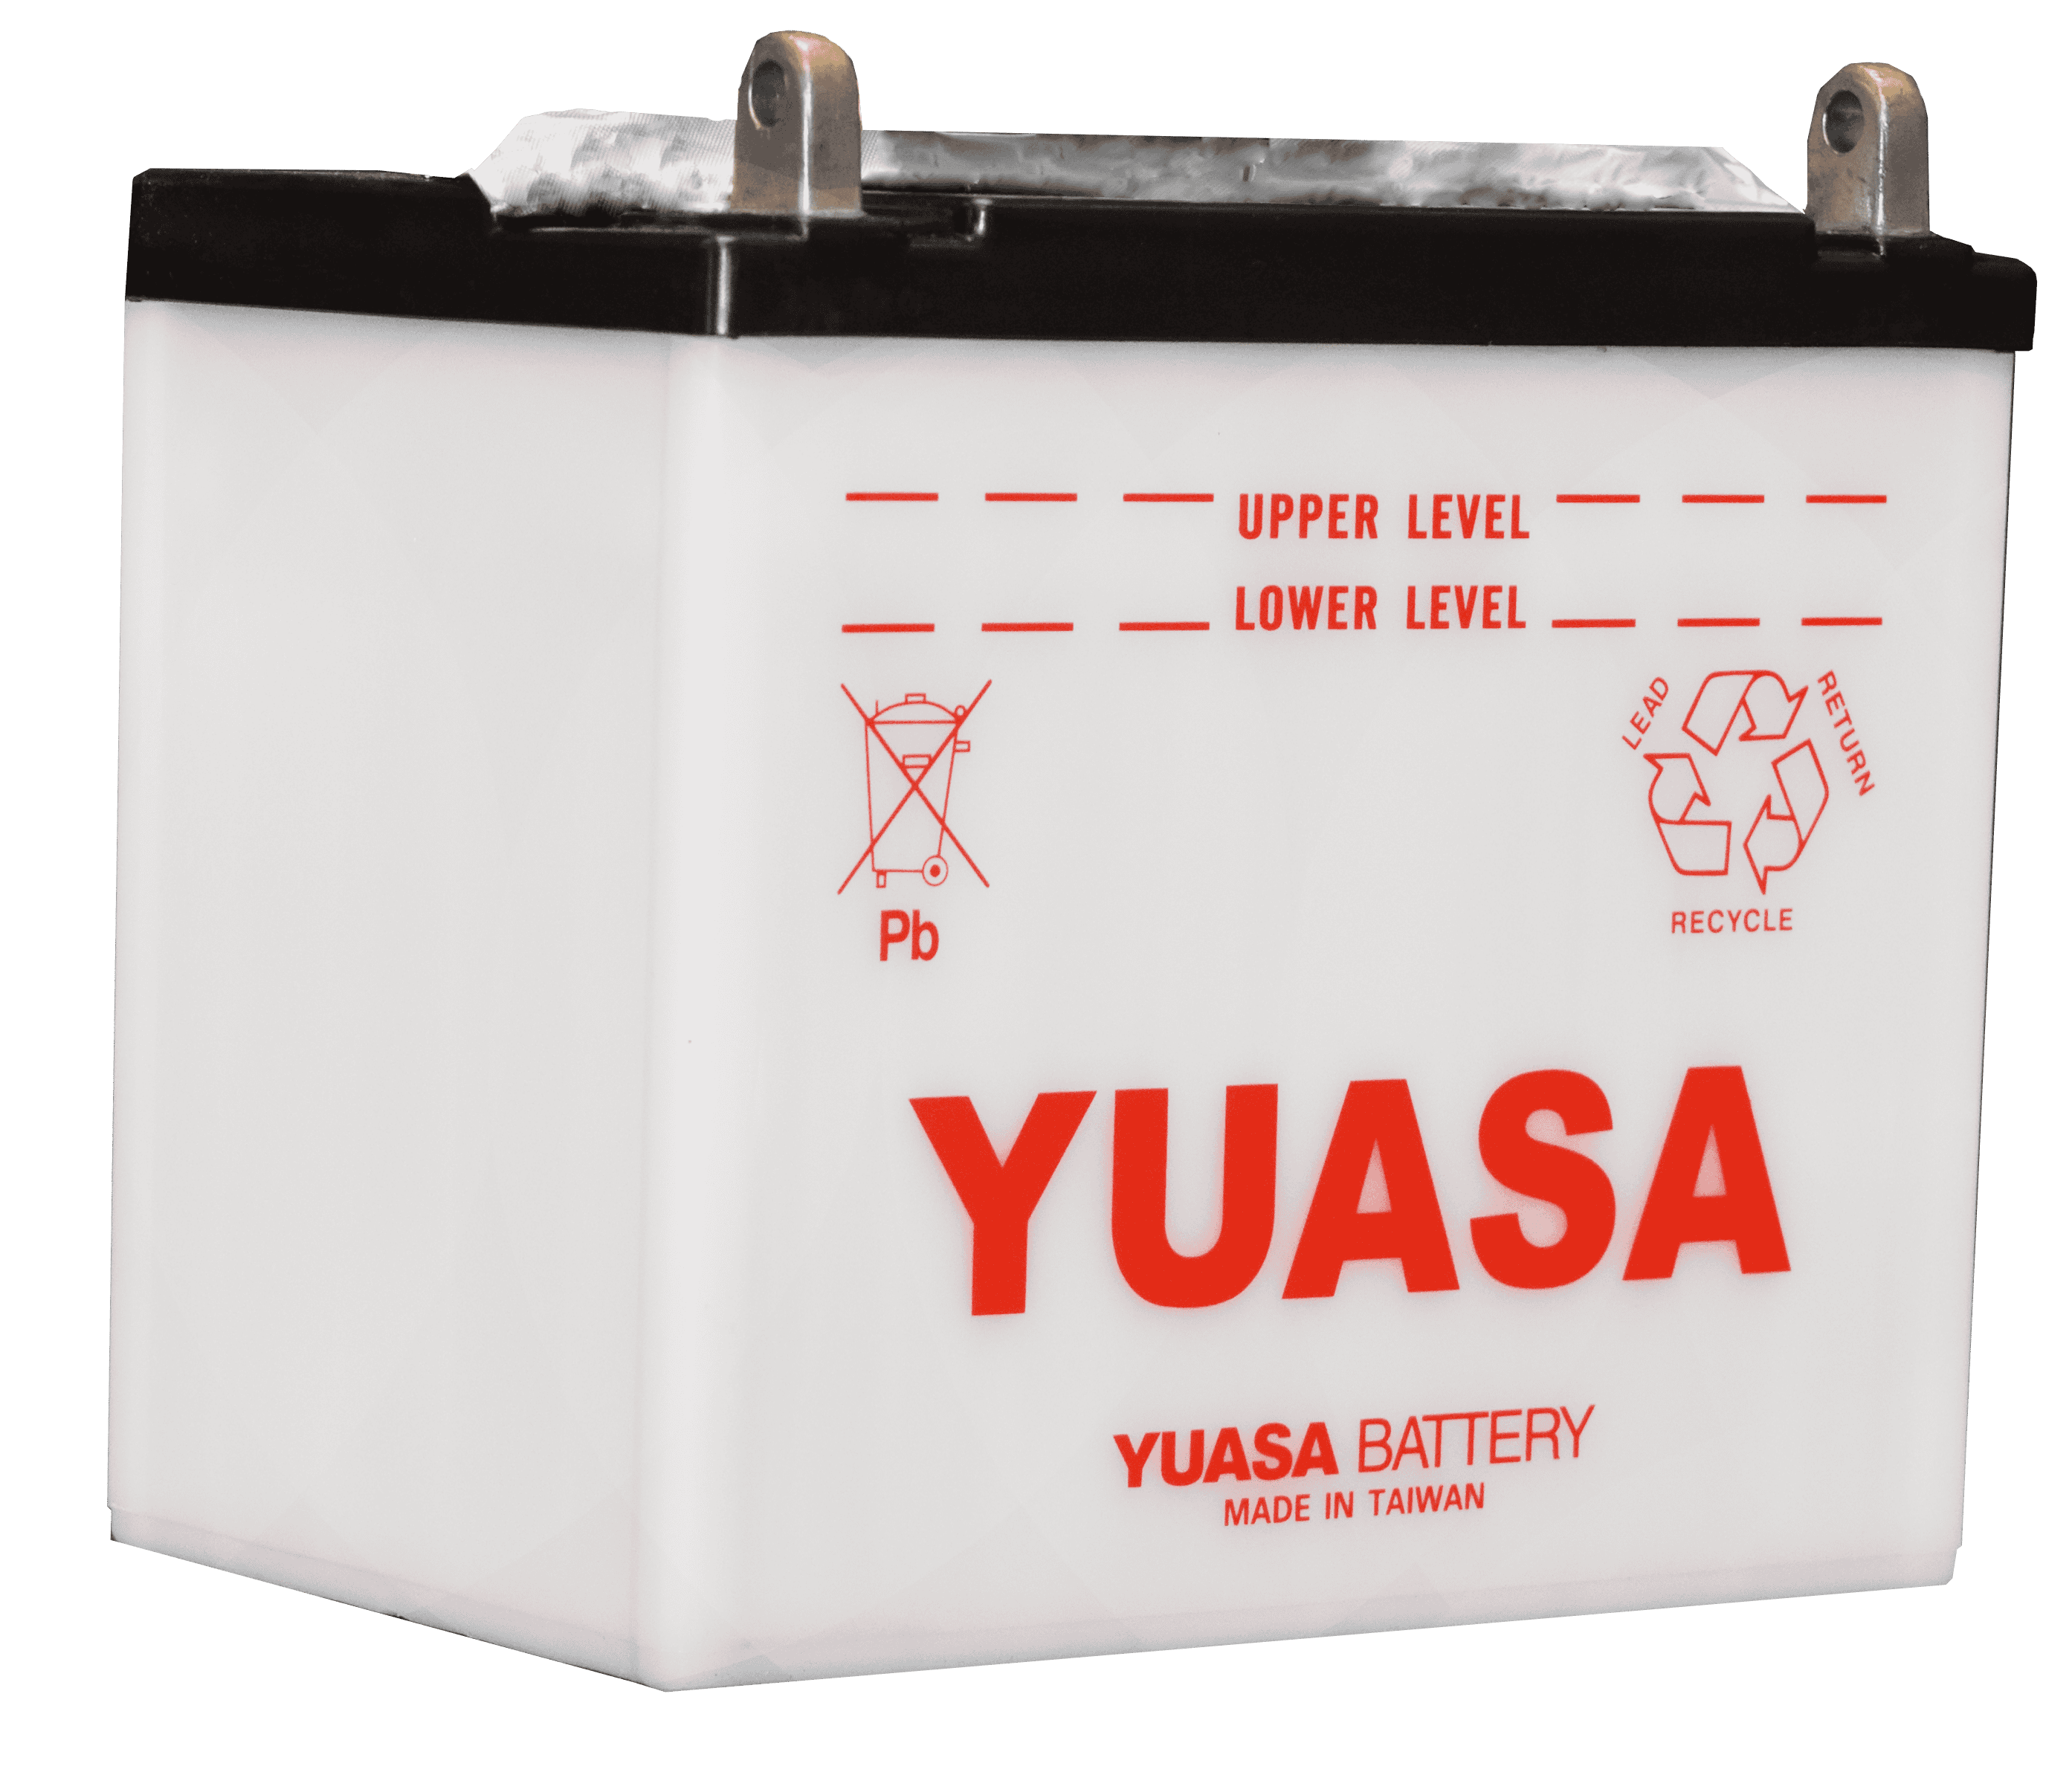 - Yuasa Battery, Inc.